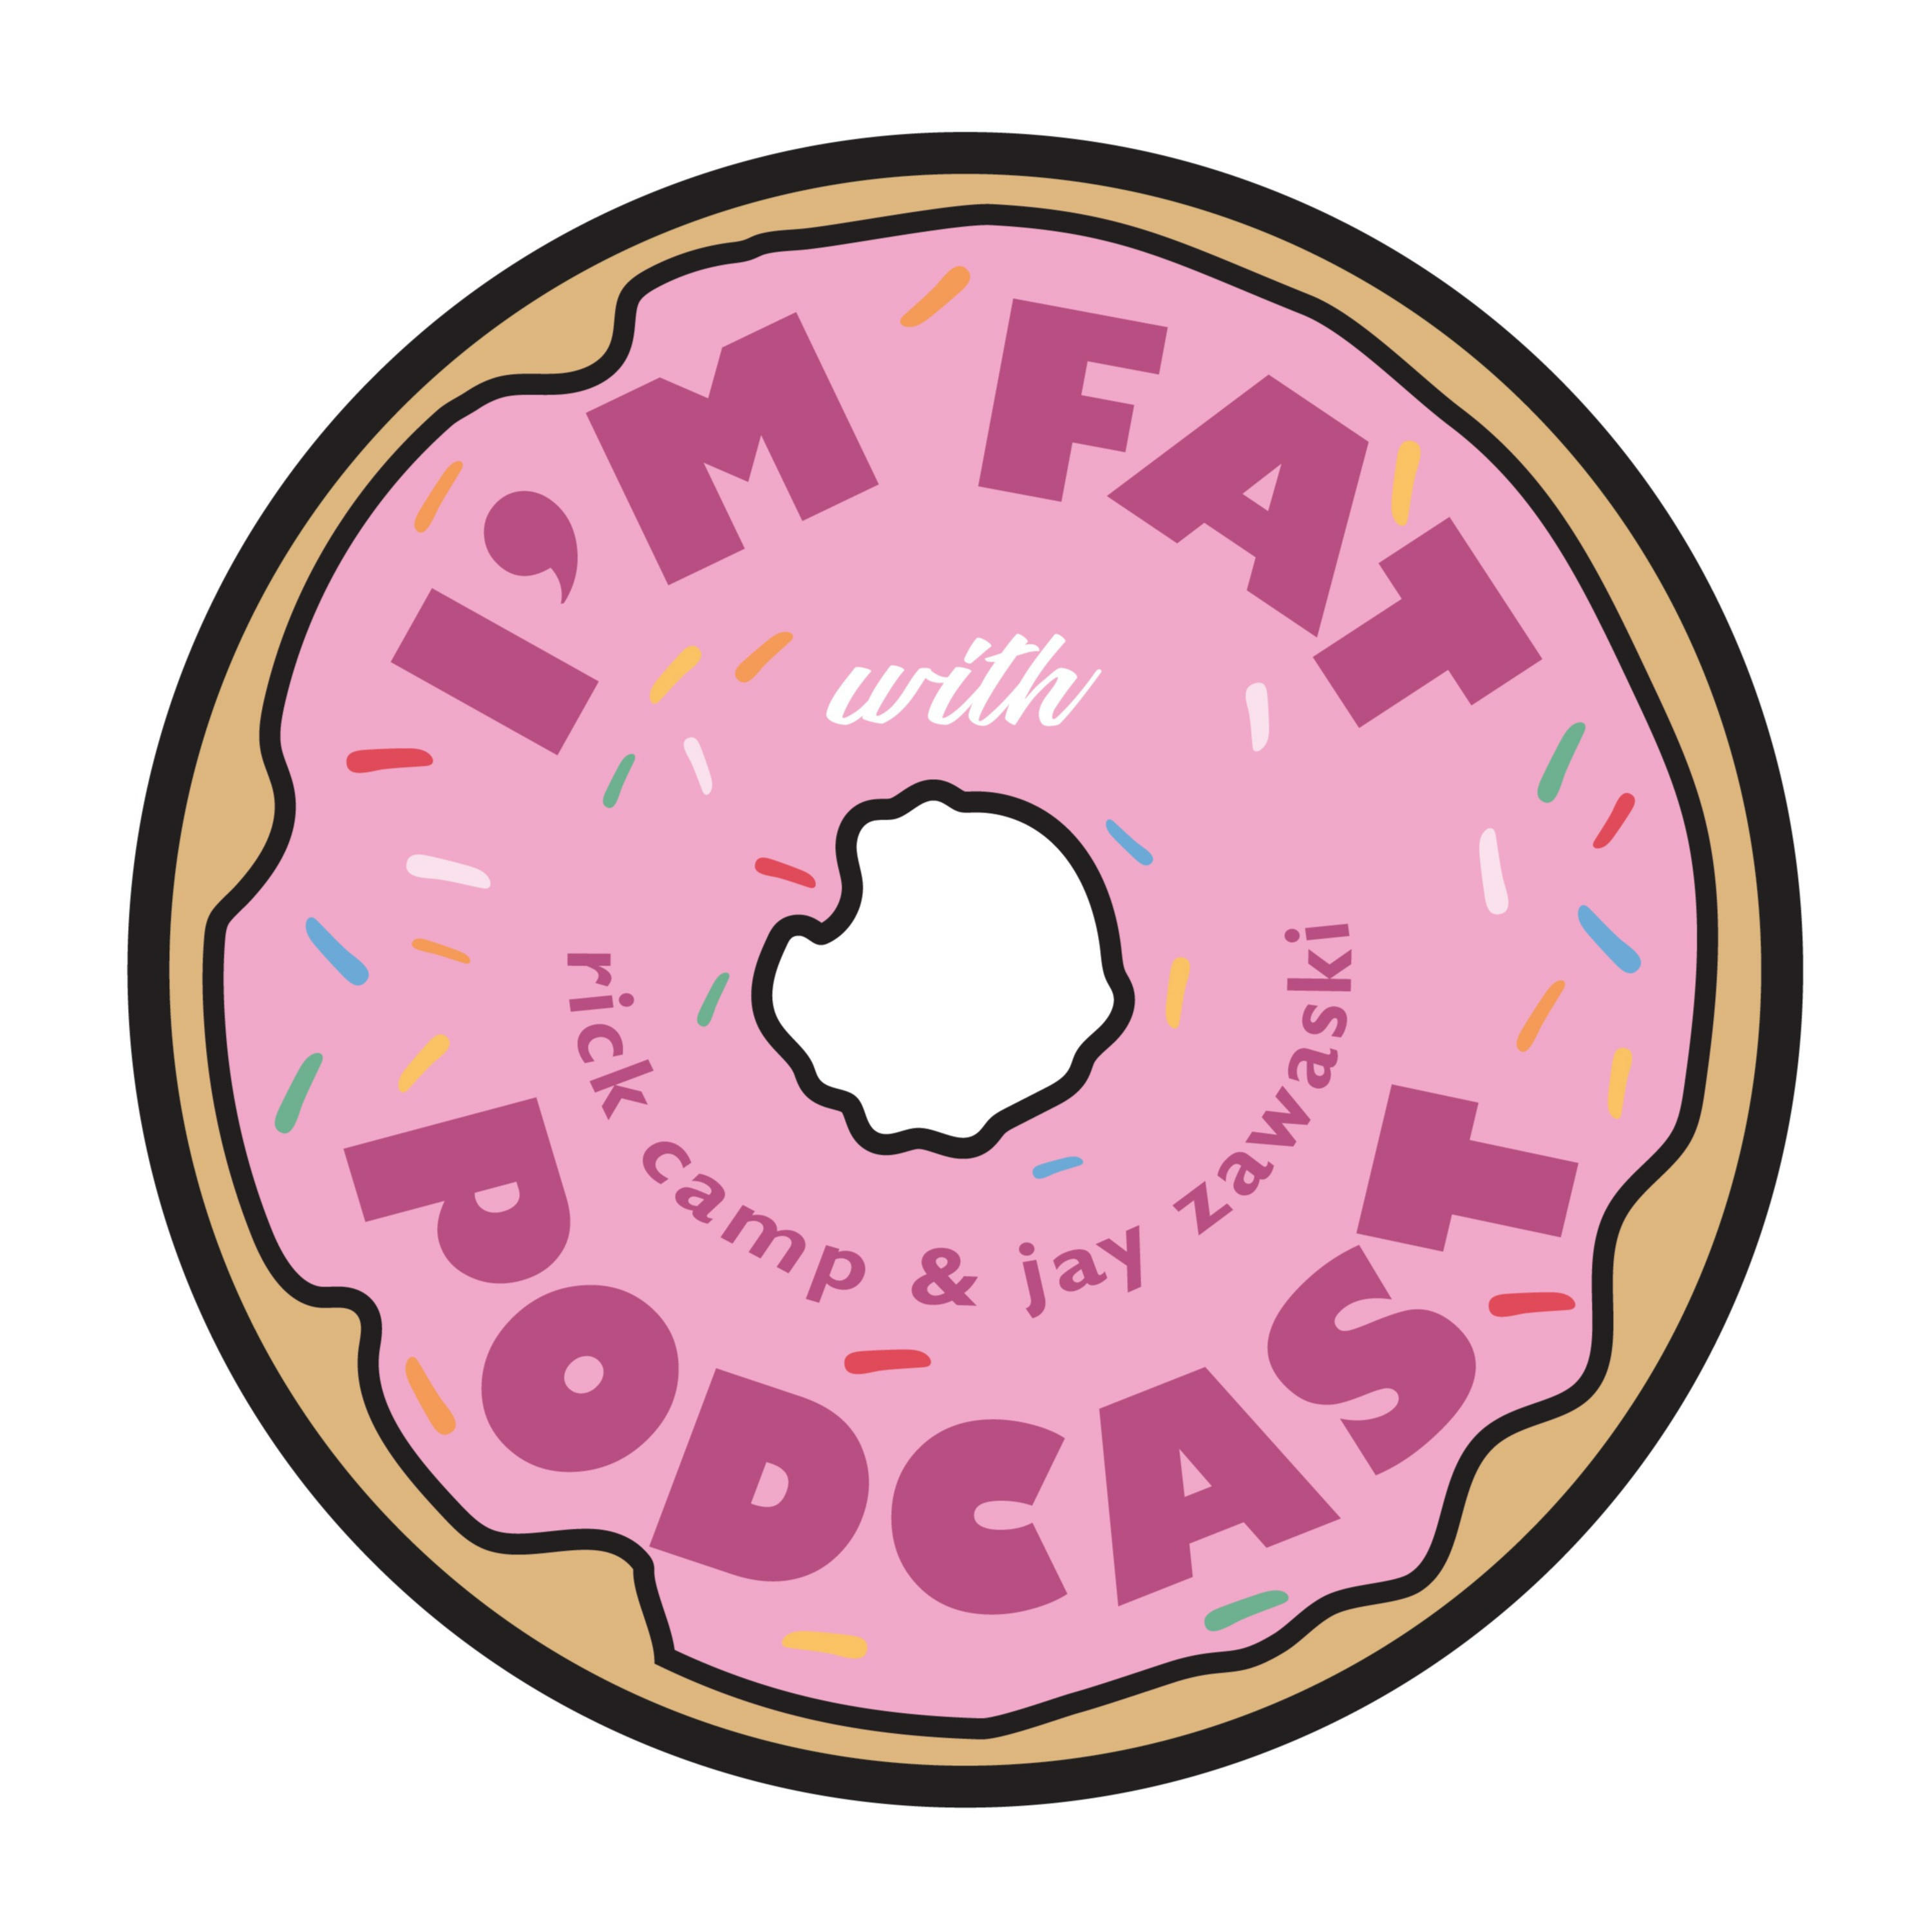 I'm Fat Podcast